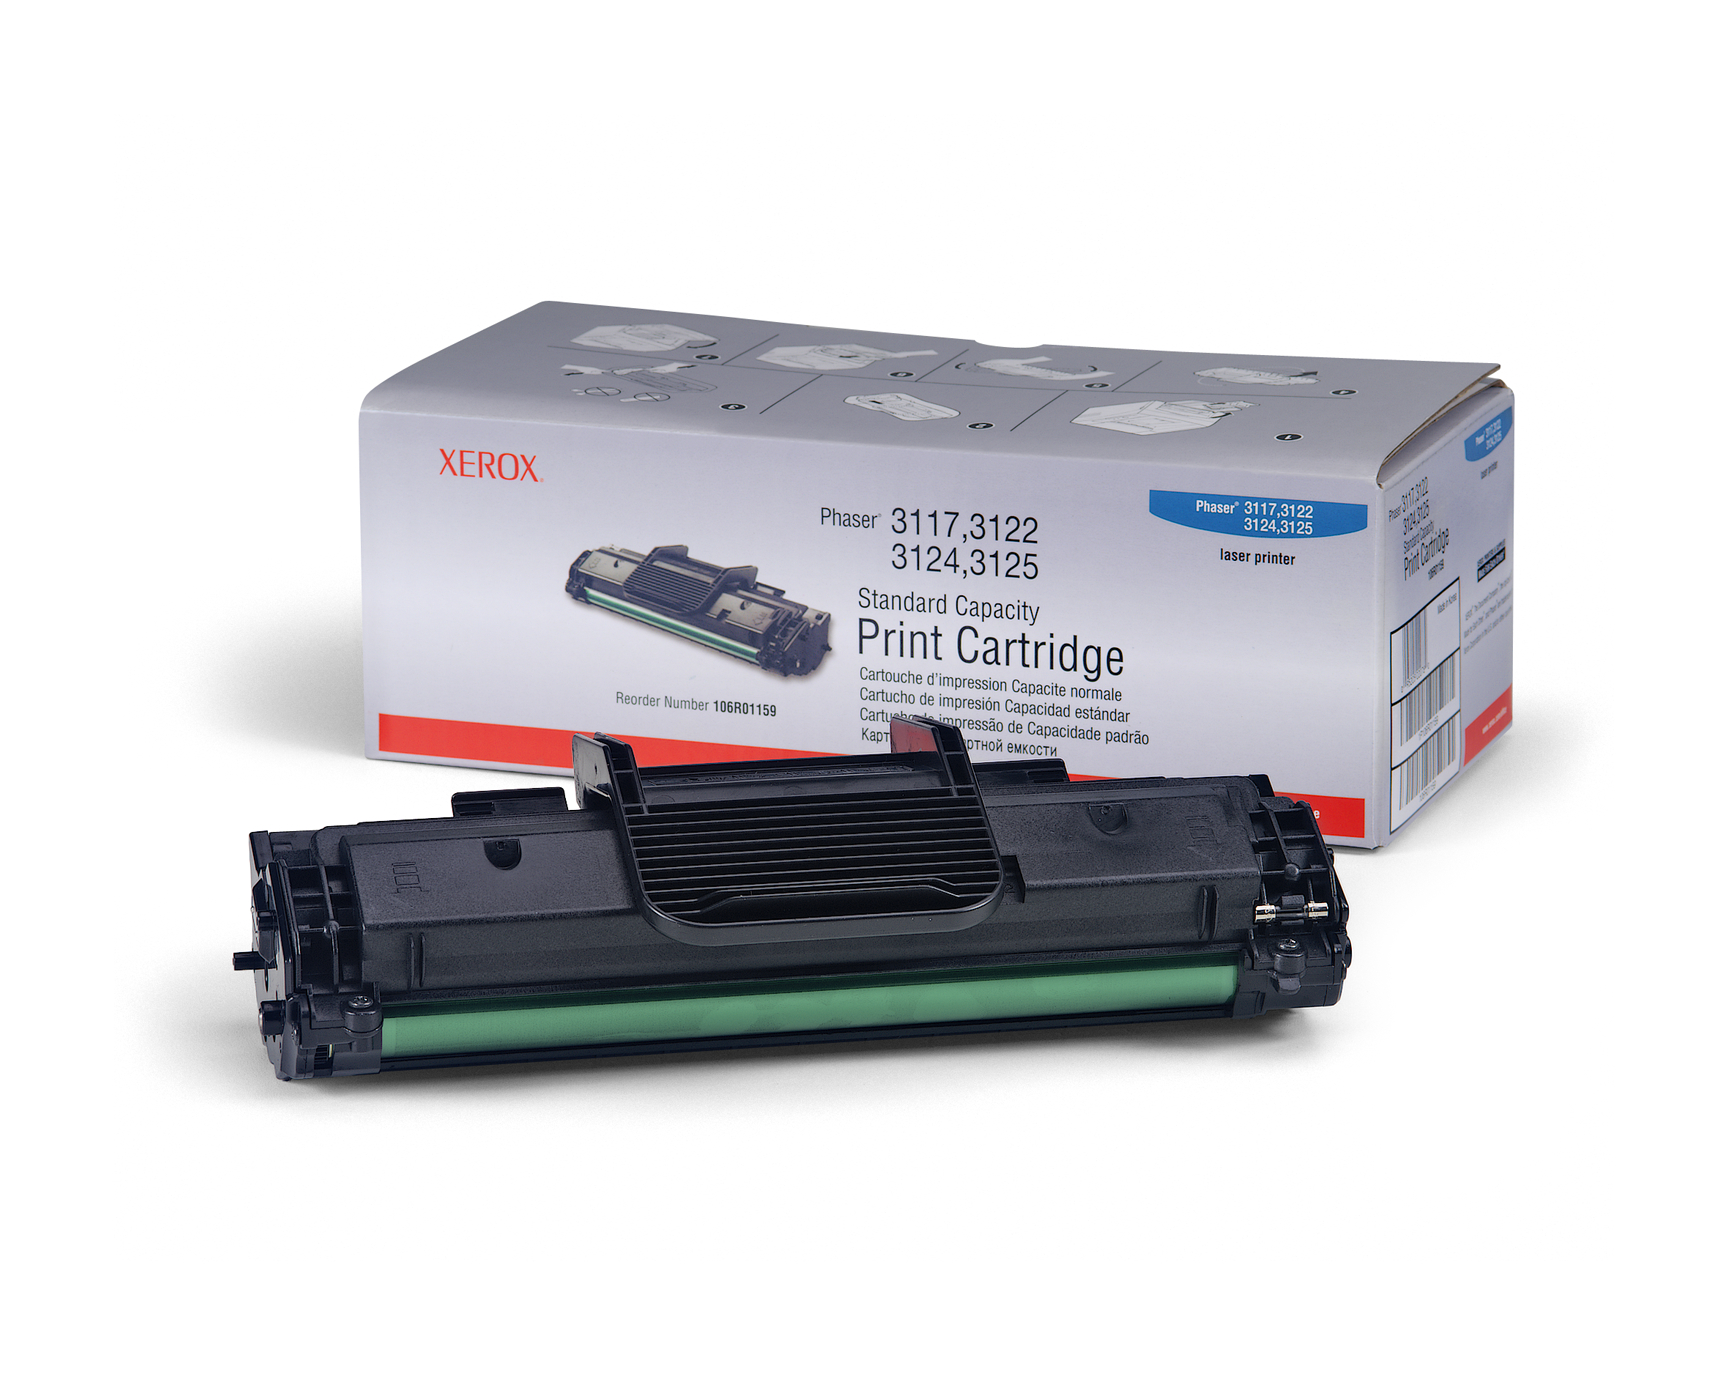 Standard Capacity Print Cartridge For Phaser 3117 / 3122 / 3124 / 3125  106R01159 Genuine Xerox Supplies